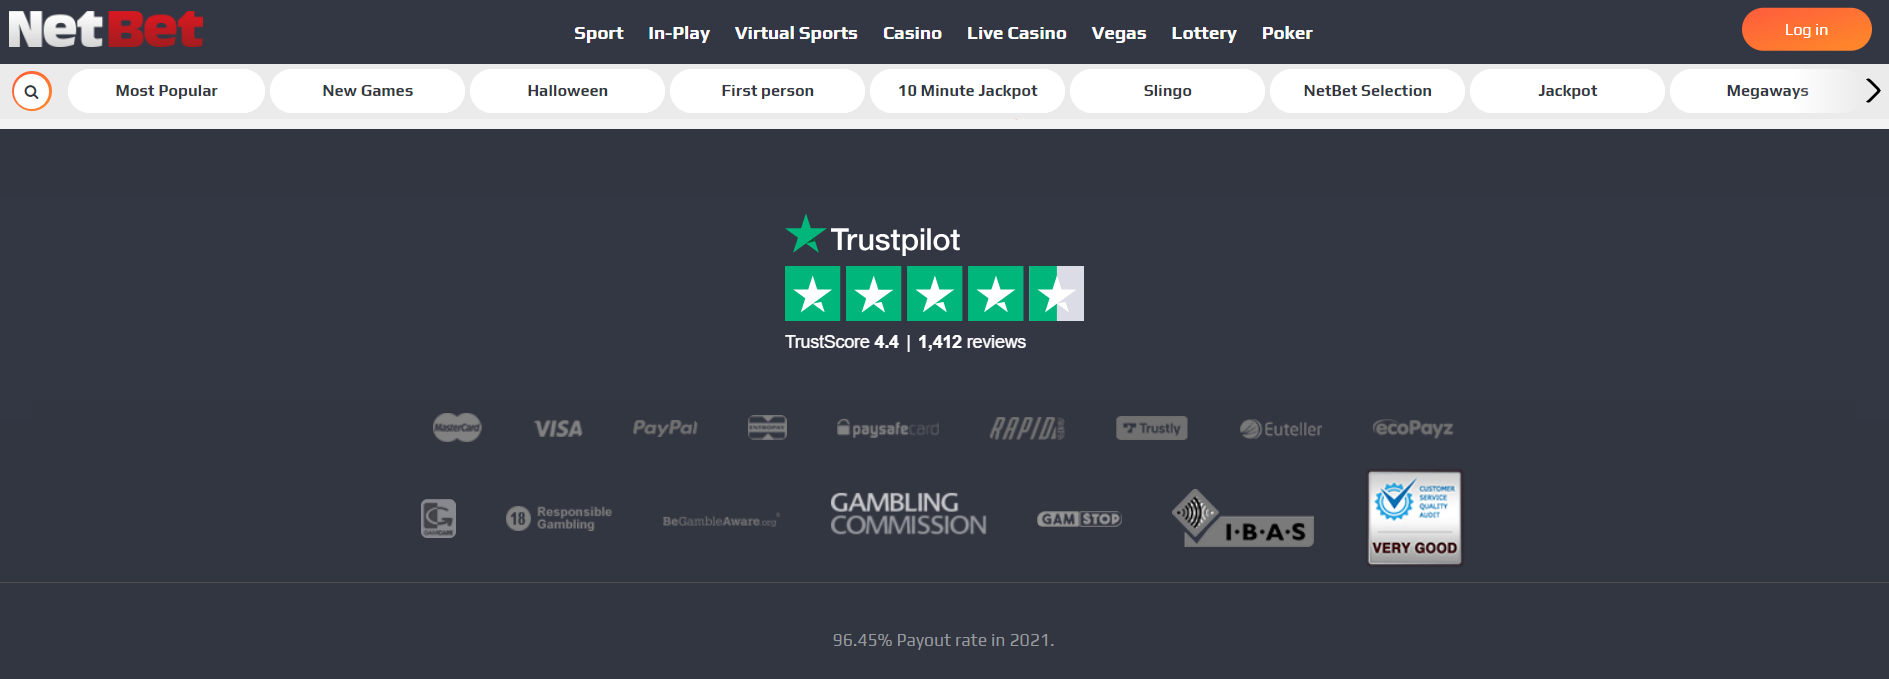 Play Online Casino at NetBet